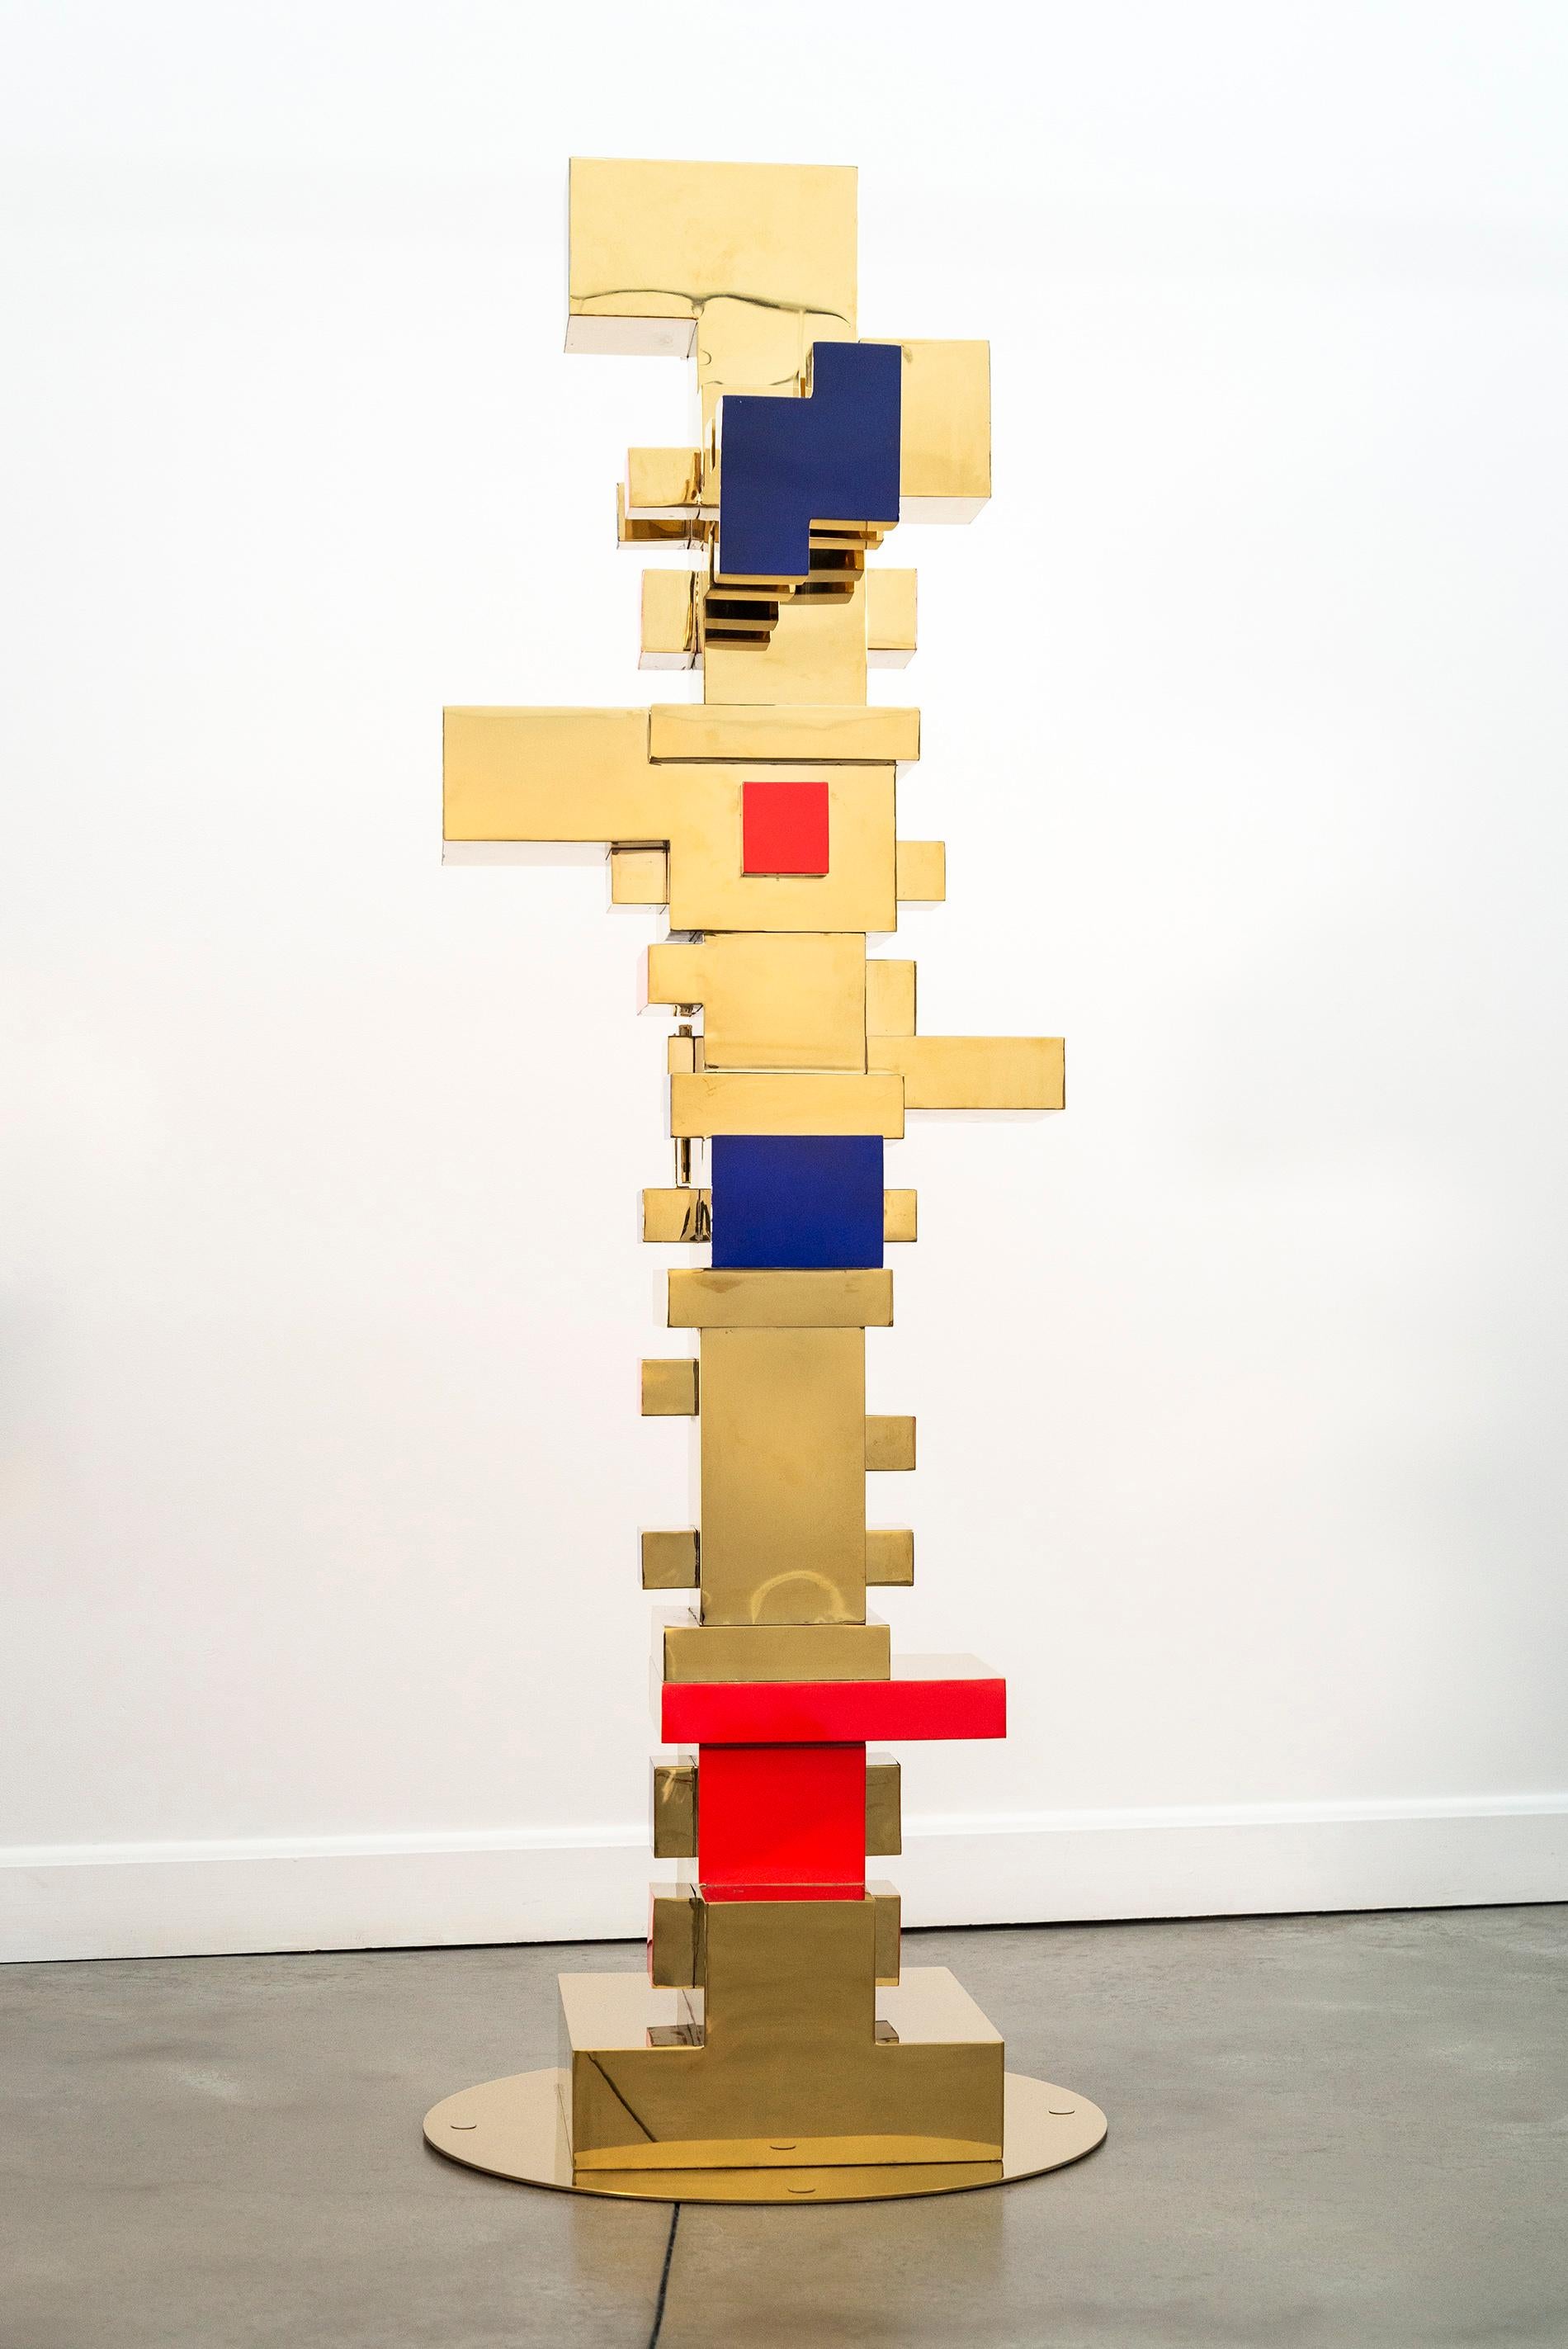 Blocs empilés - or, rouge, bleu - totem, sculpture en acier inoxydable plaqué or - Sculpture de Viktor Mitic